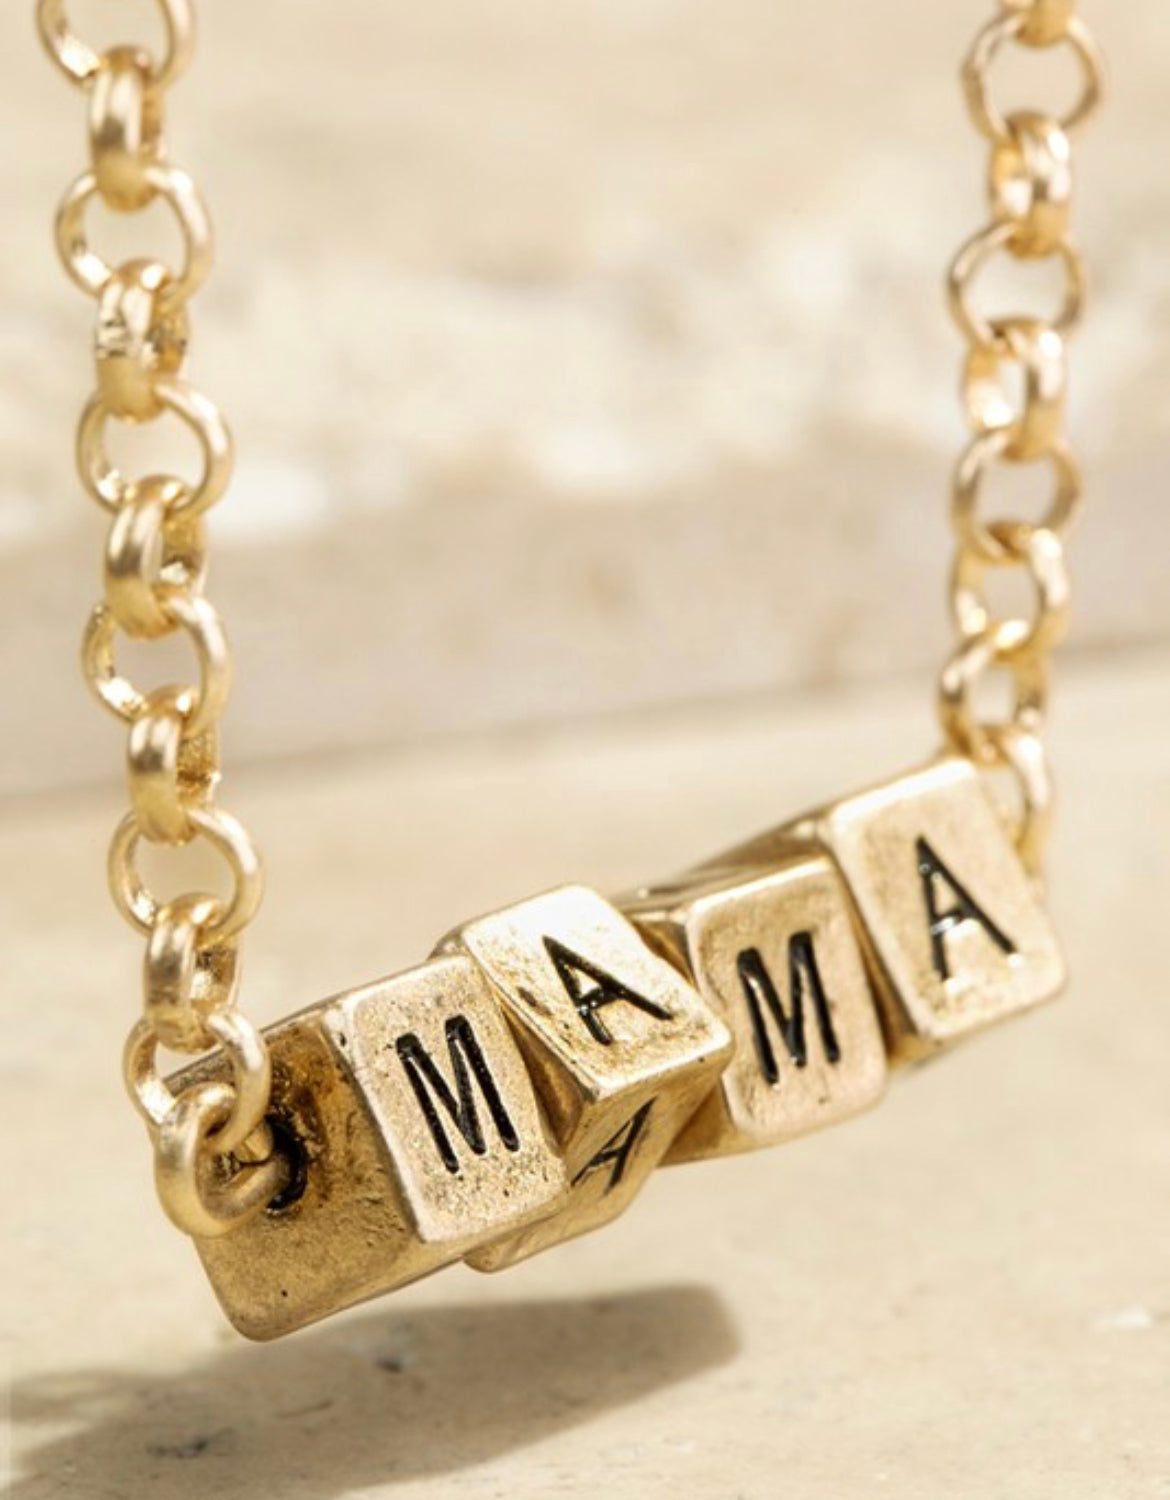 MAMA Block Necklace